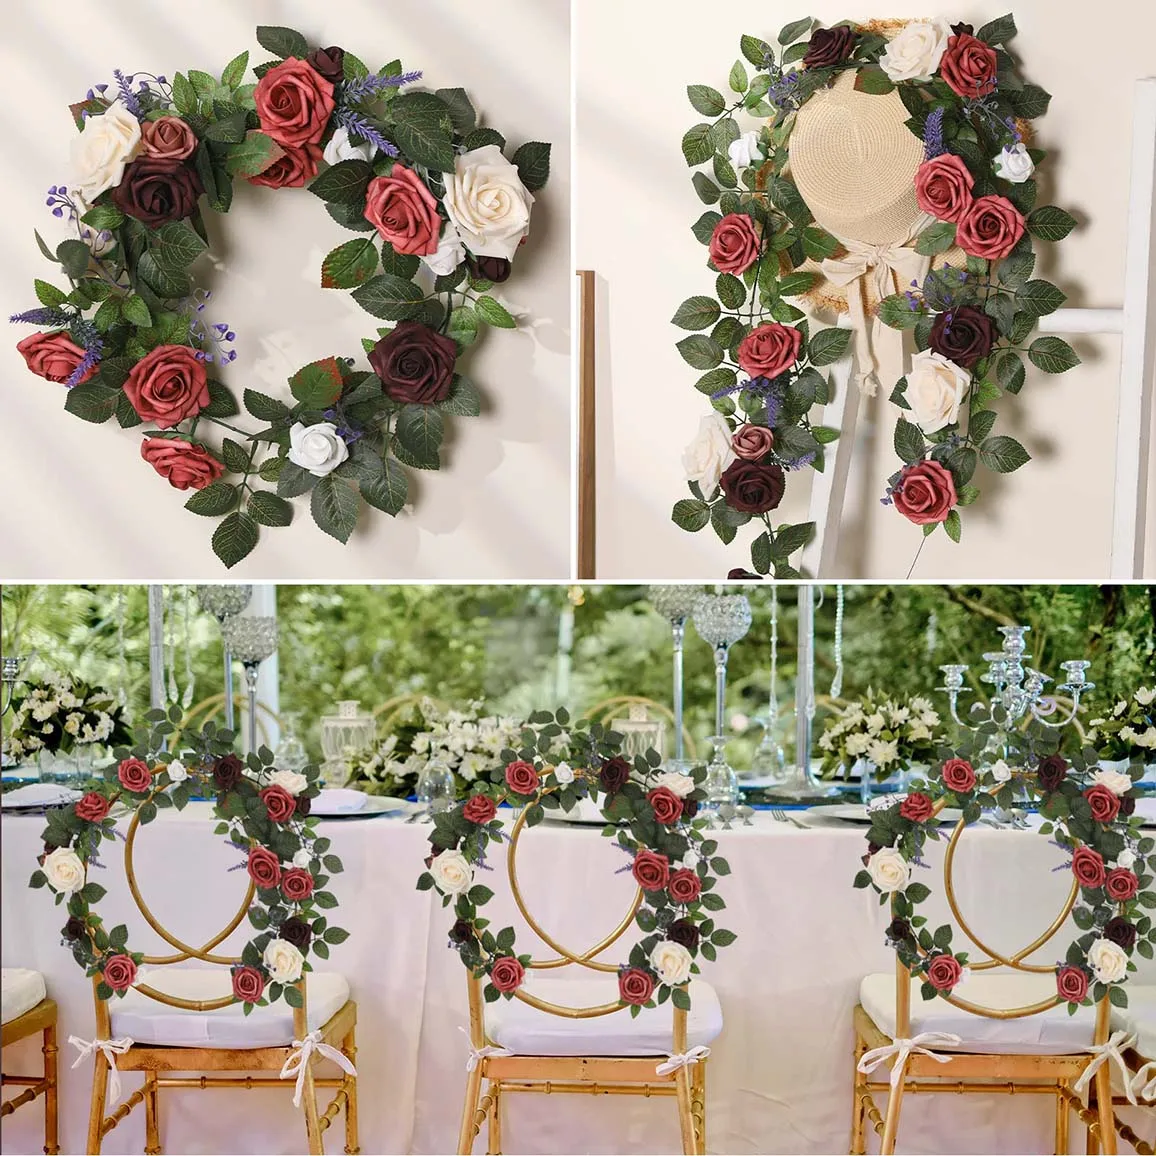 

2M Fake Floral Garland Luxury Artificial Roses Flower with Stems,Row Arrangement Decor DIY Wedding Rose Vine Tables Centerpieces